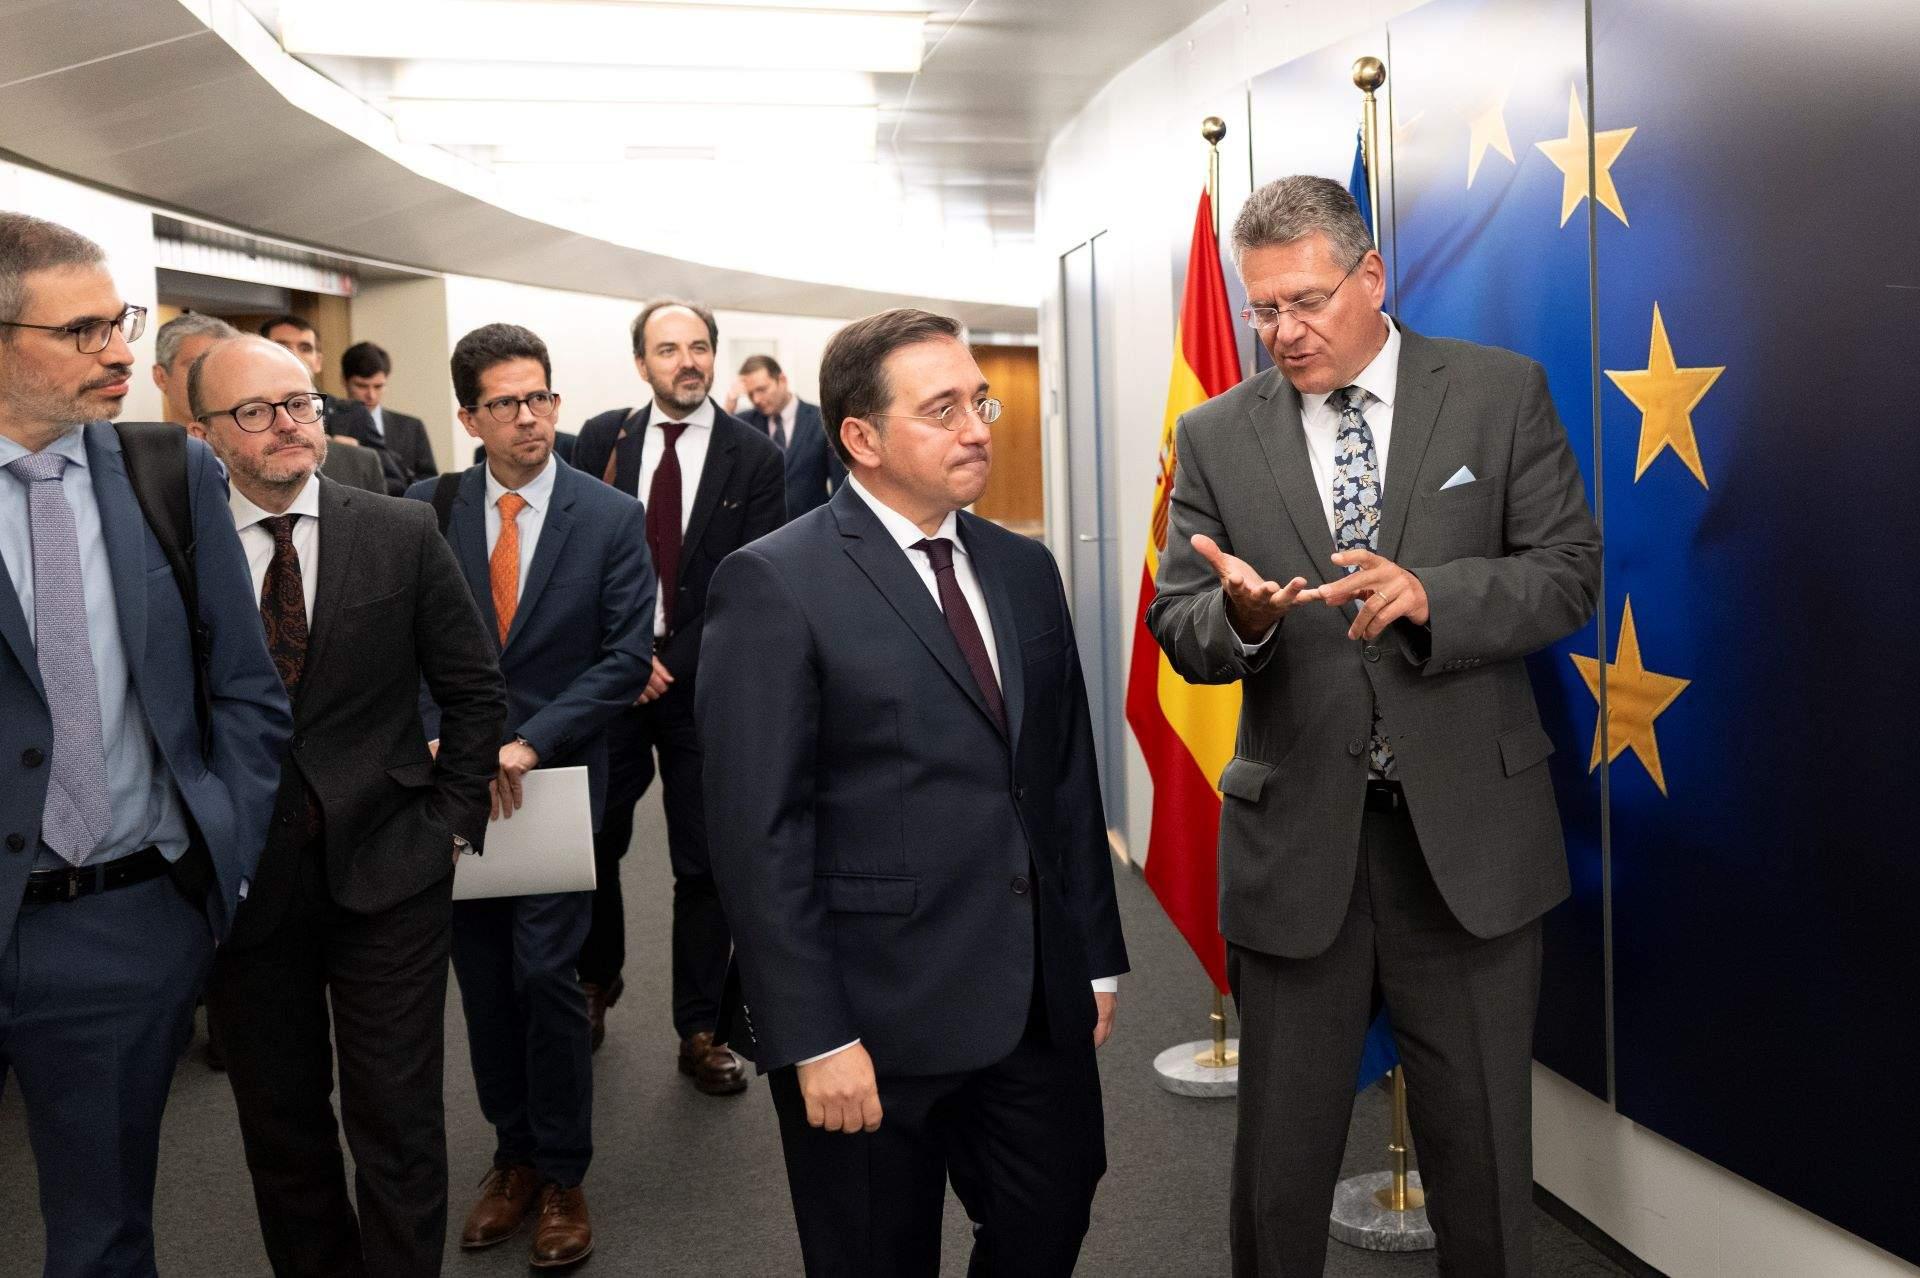 Maroš Šefcovic Jose Manuel Albares Gibraltar espanya rege unit ue / Comissio Europea